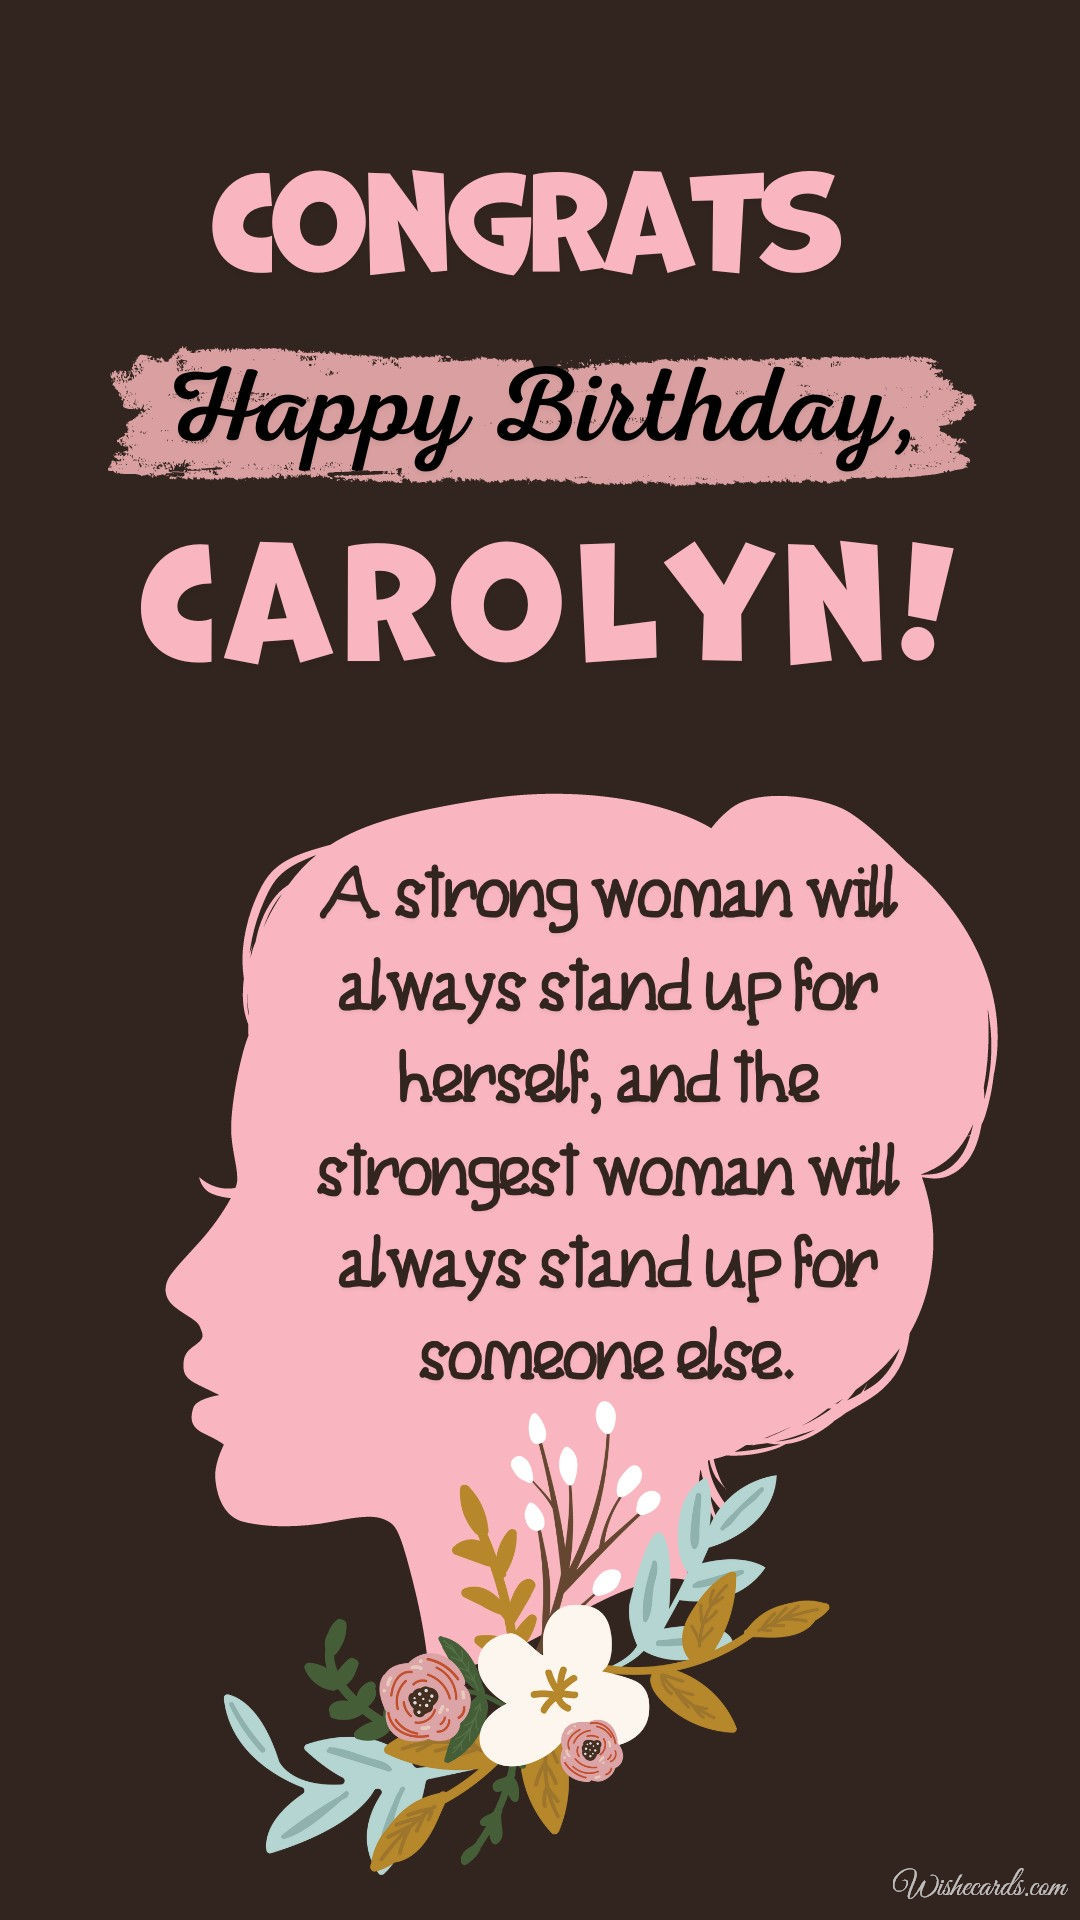 Happy Birthday Carolyn Images